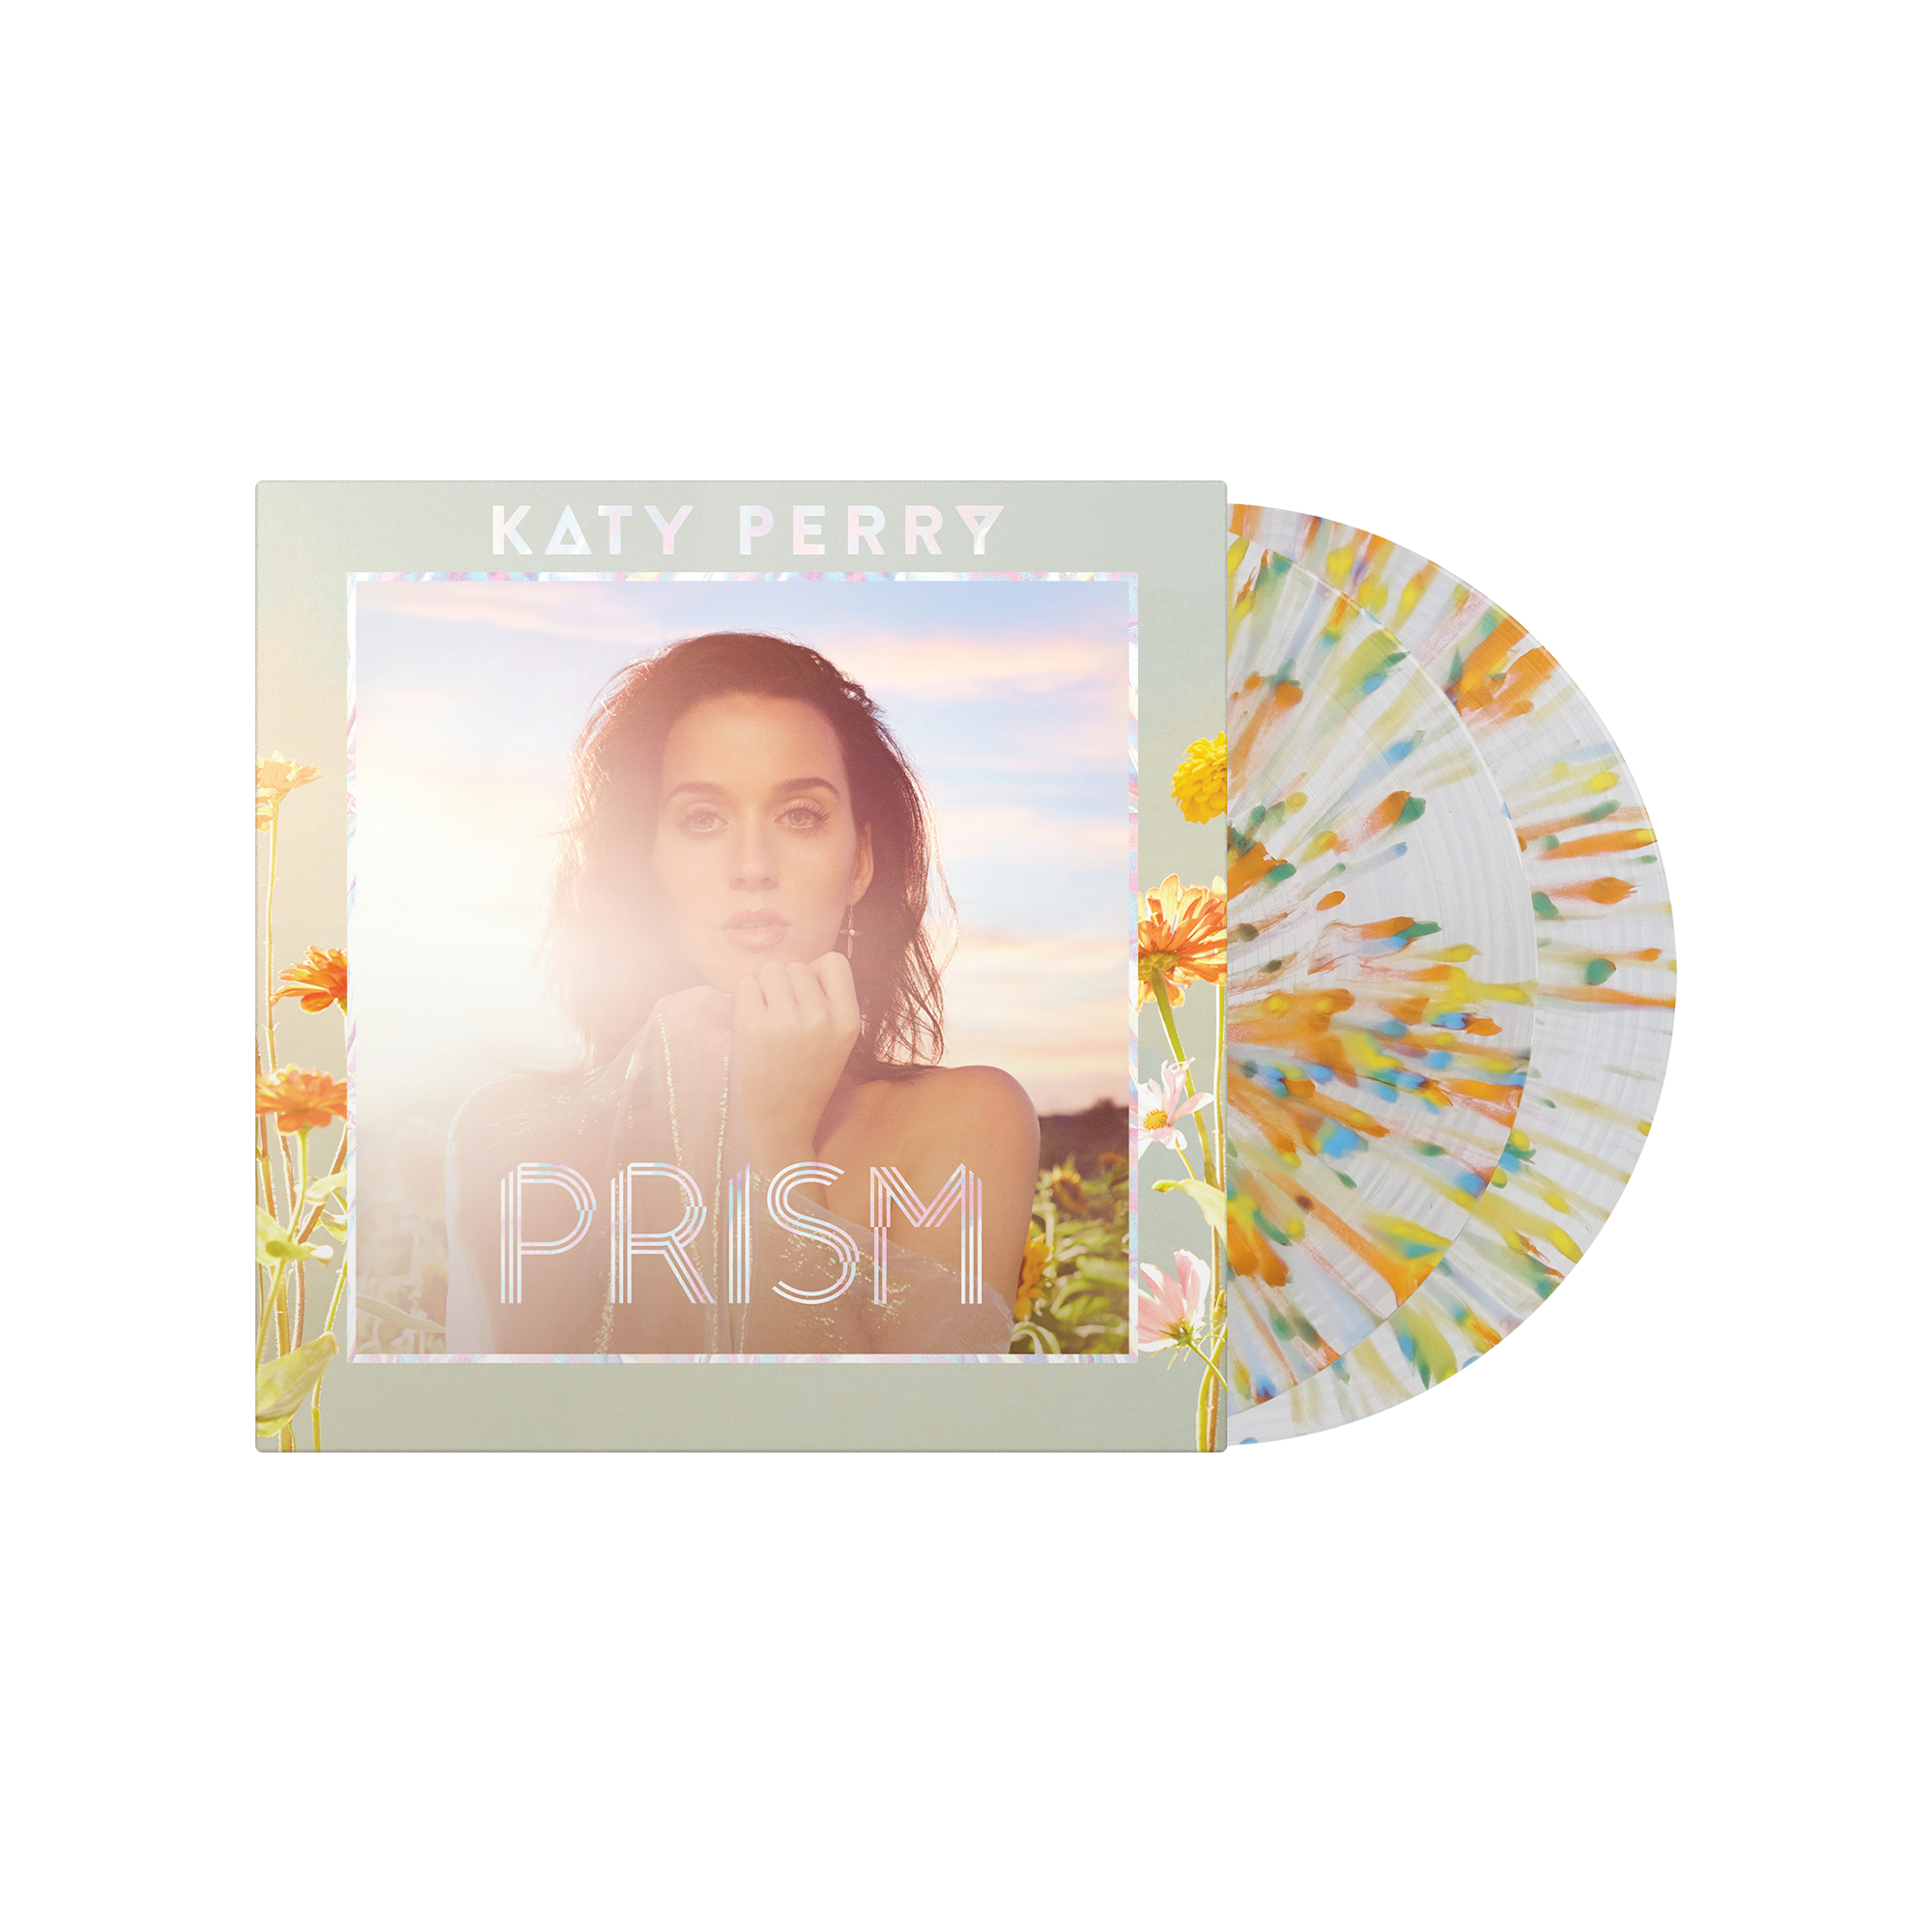 Katy Perry - Prism (10th Anniversary Edition): Exclusive Splatter Vinyl 2LP